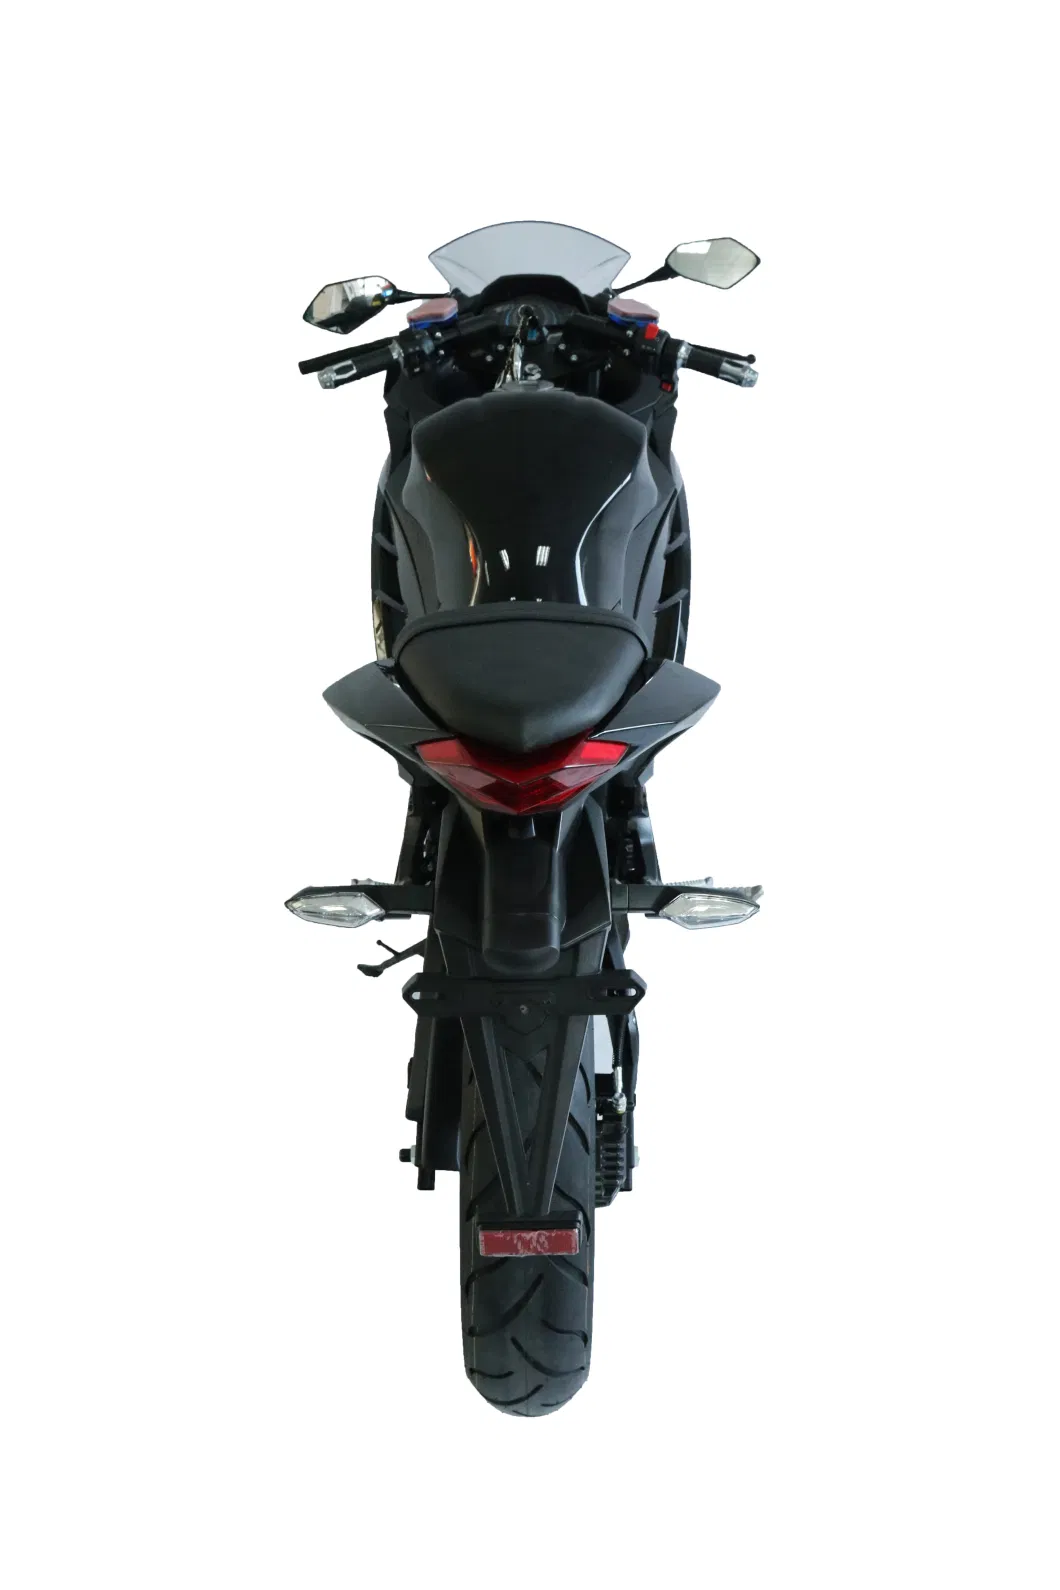 New Hot Selling Electric Motorcycle Black Lover - Motorcycle (1000W-5000W) Lithium 72V (30Ah 60Ah)